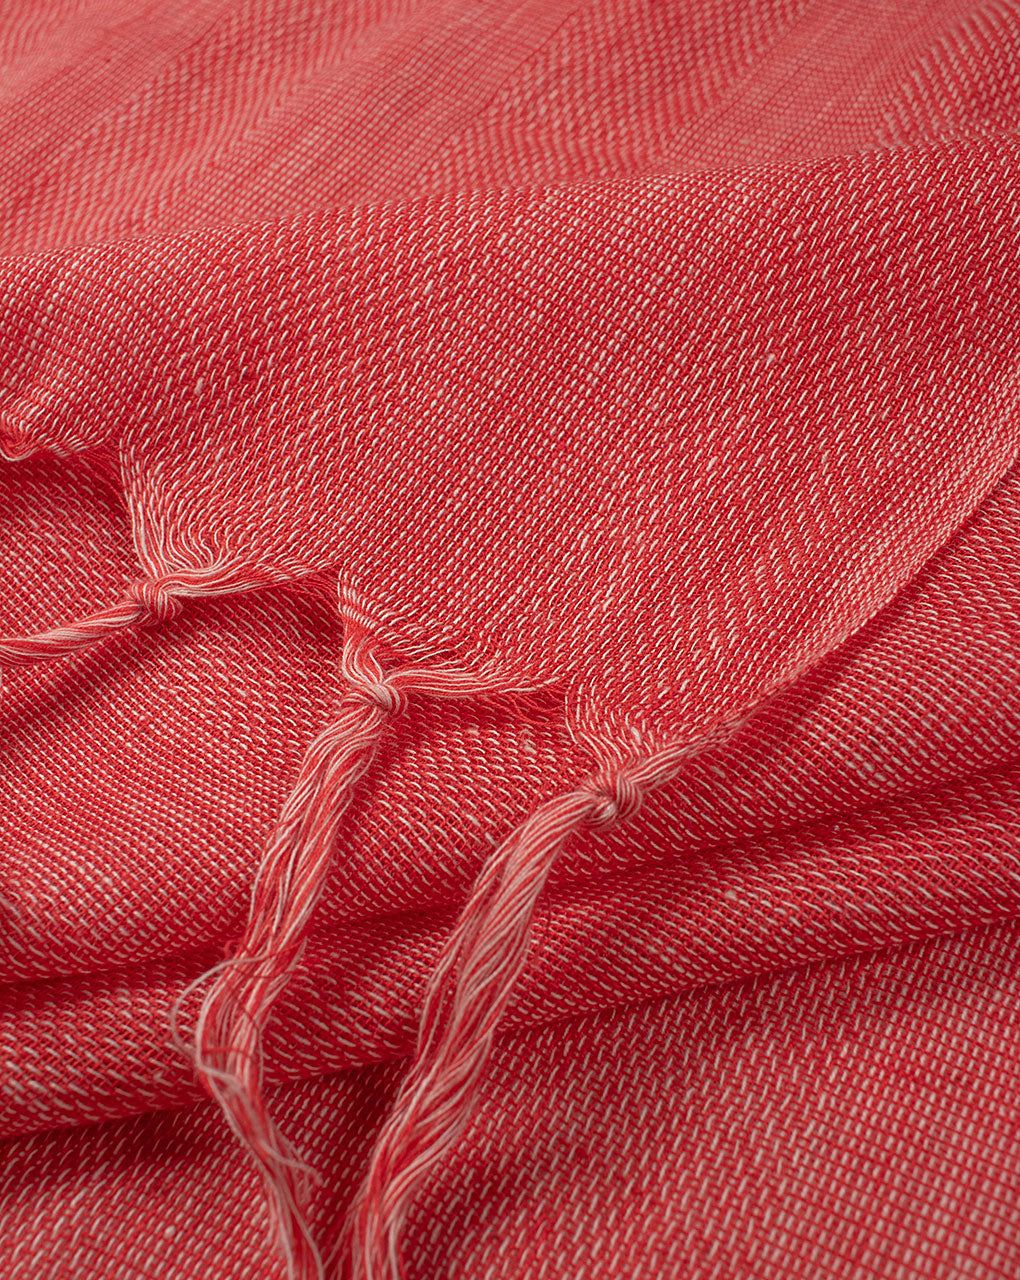 Stripes Woven Bhagalpuri Cotton Stole - Fabriclore.com